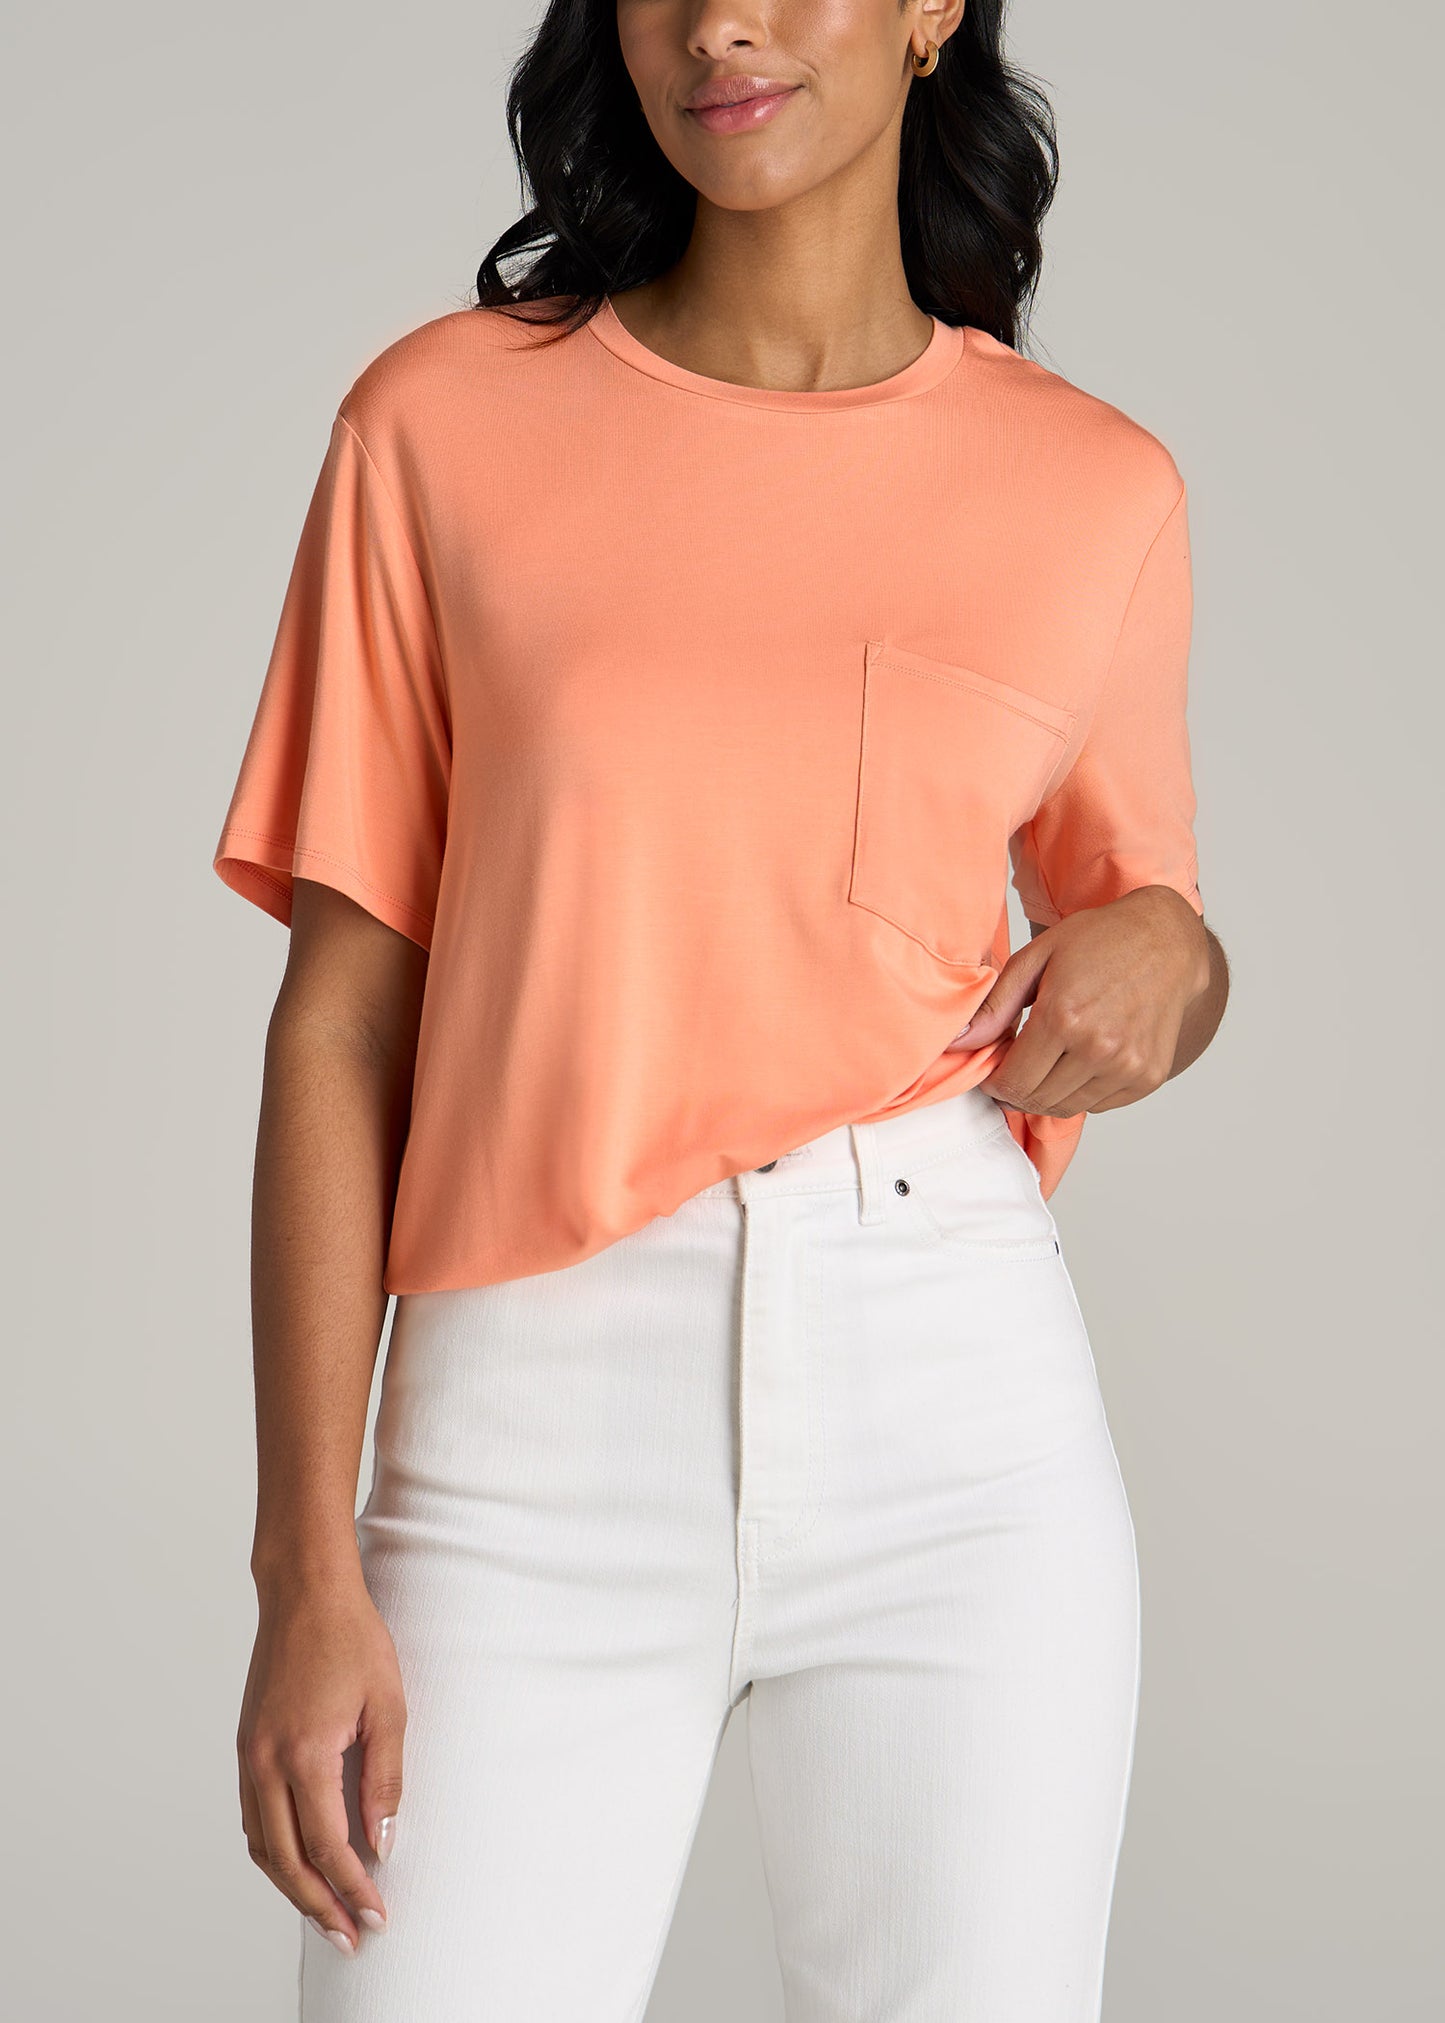 Apricoat Thermal Shirt - Women – APRICOAT